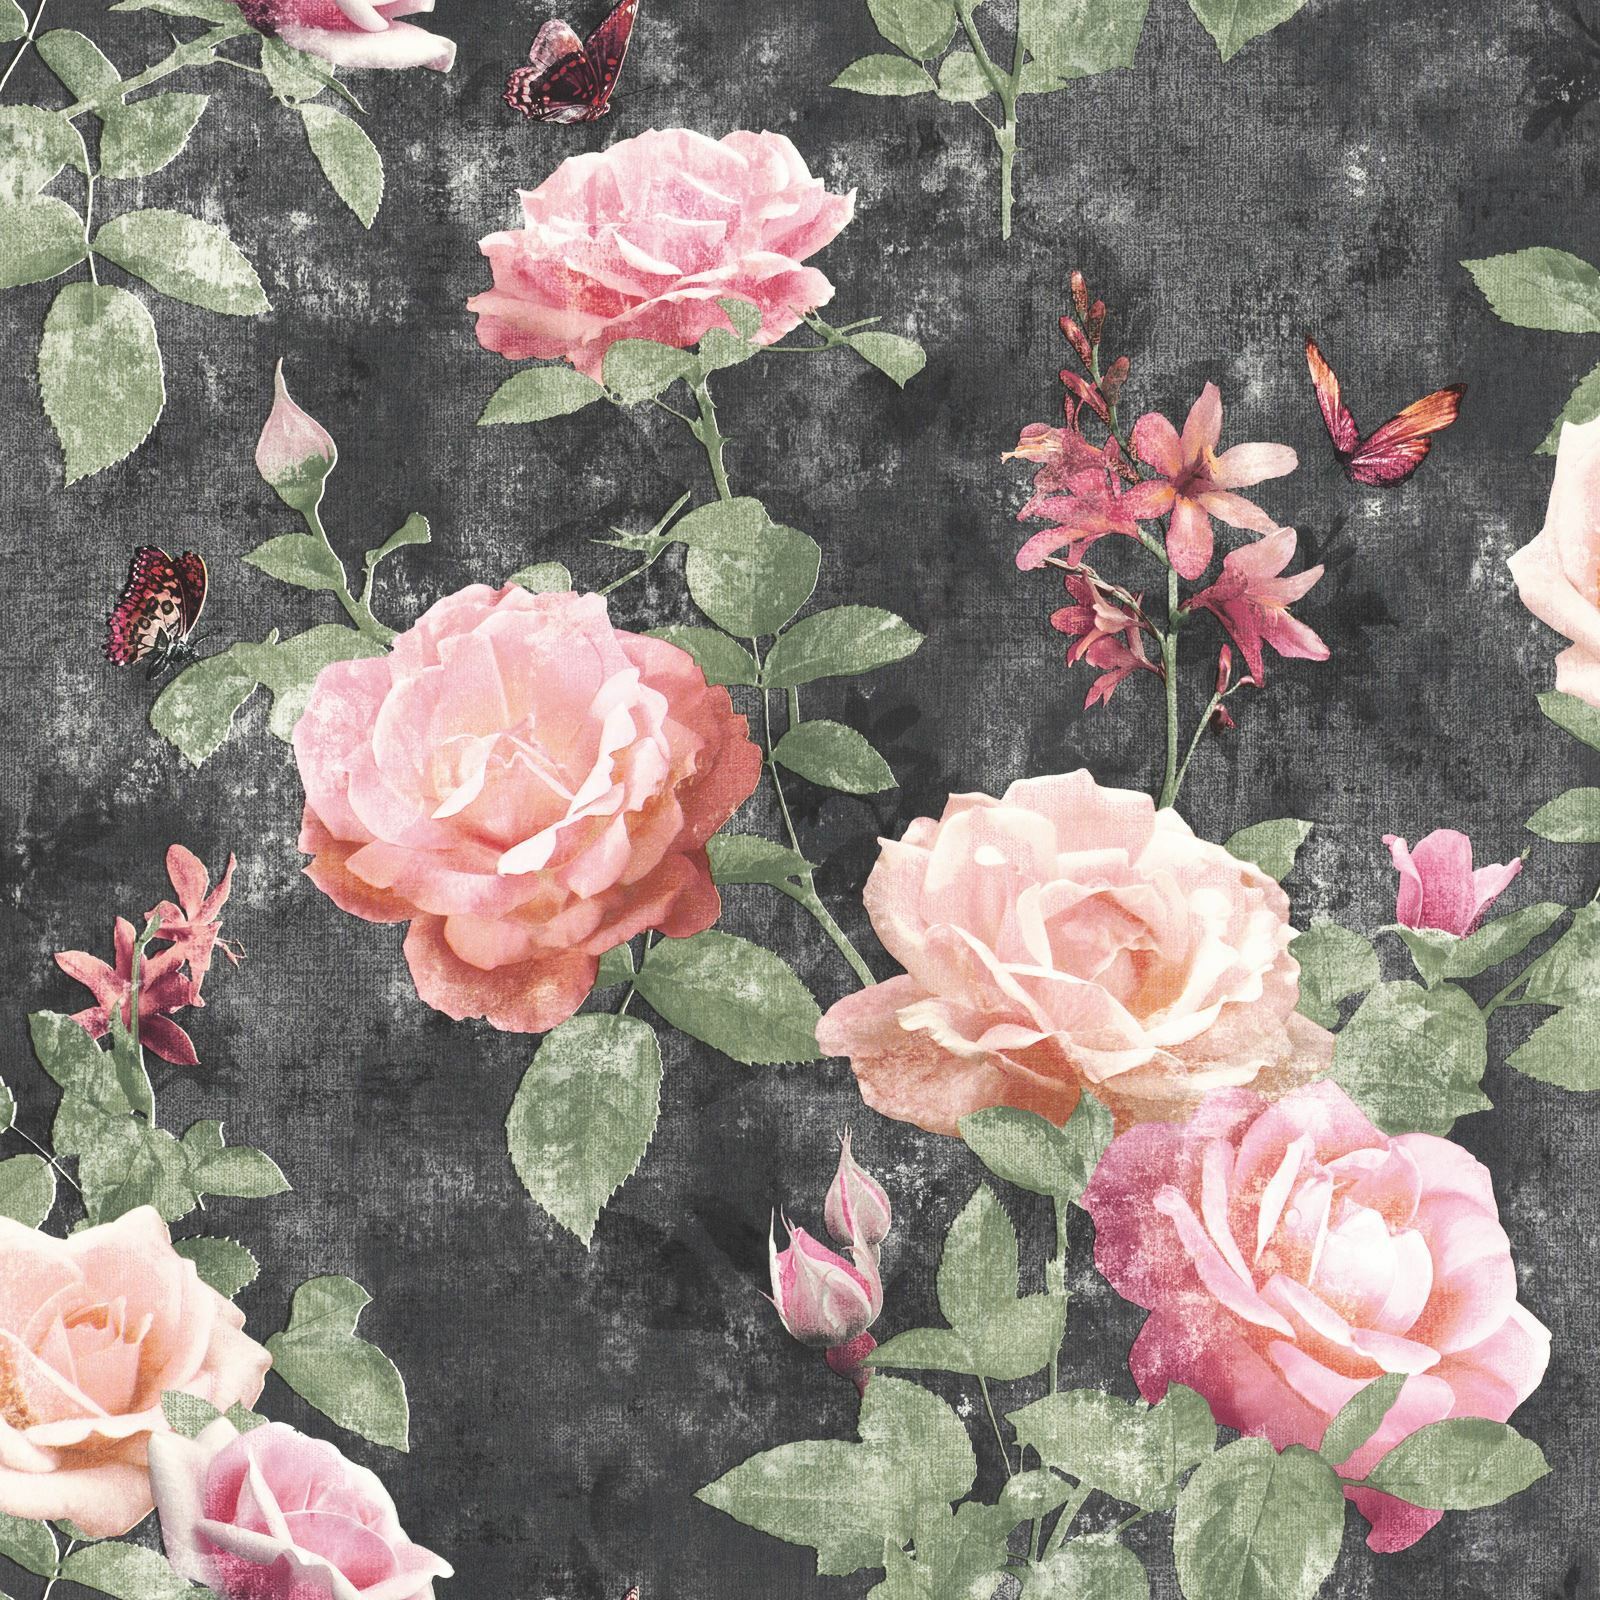 Rasch Portfolio Vintage Rose Wallpaper Pink / Charcoal 215014 Flowers  4000441215014 | eBay